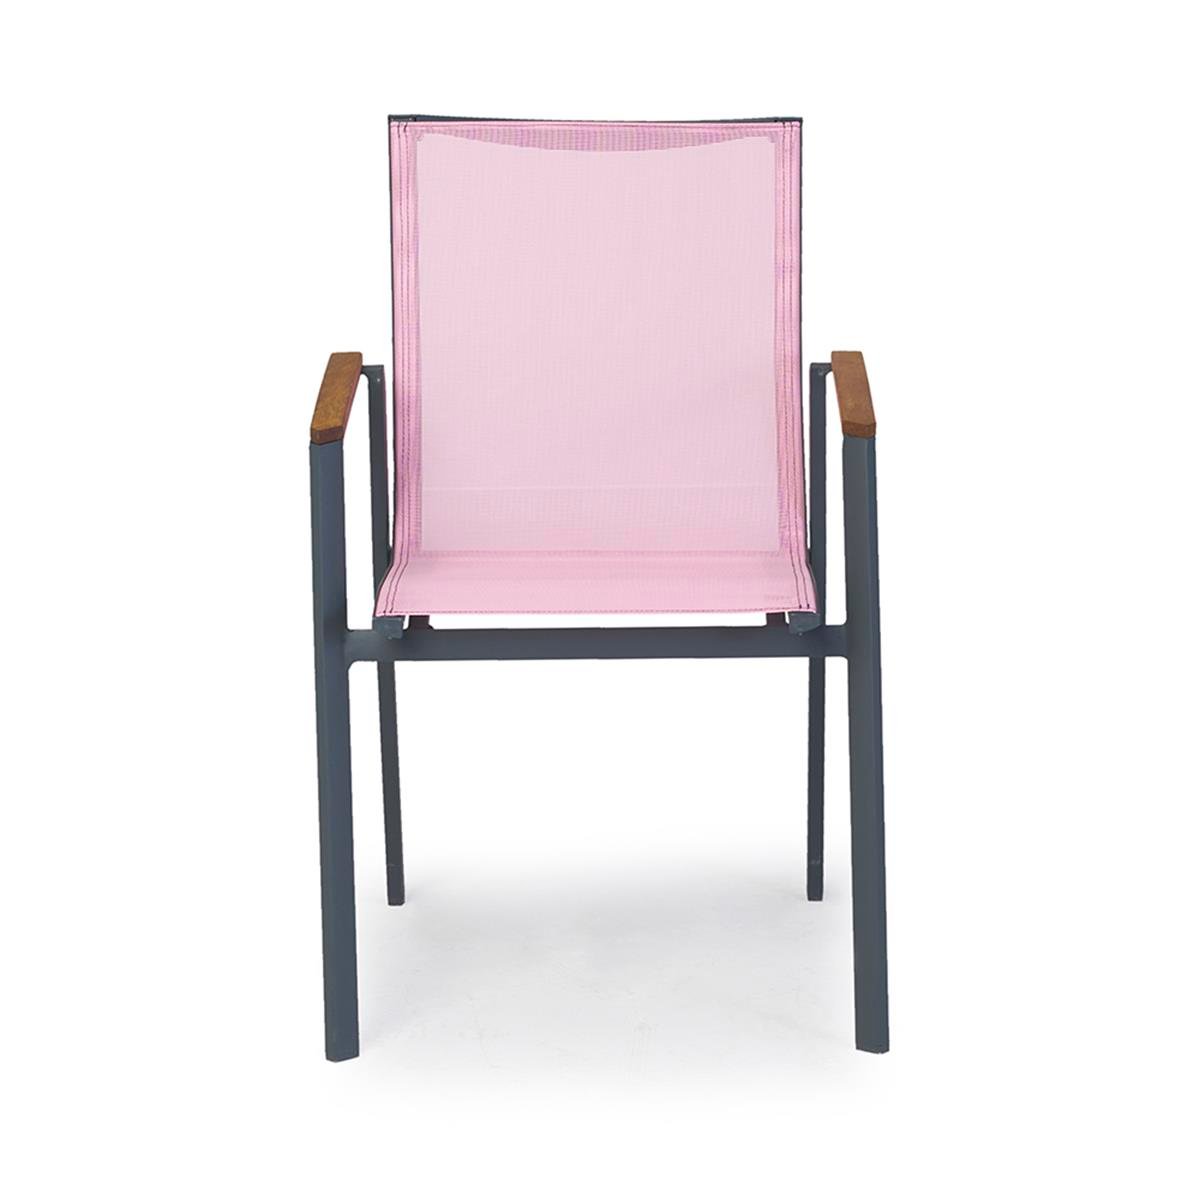 Kollu Aluminyum Sandalye - İskelet Antrasit-Fileli - Pembe